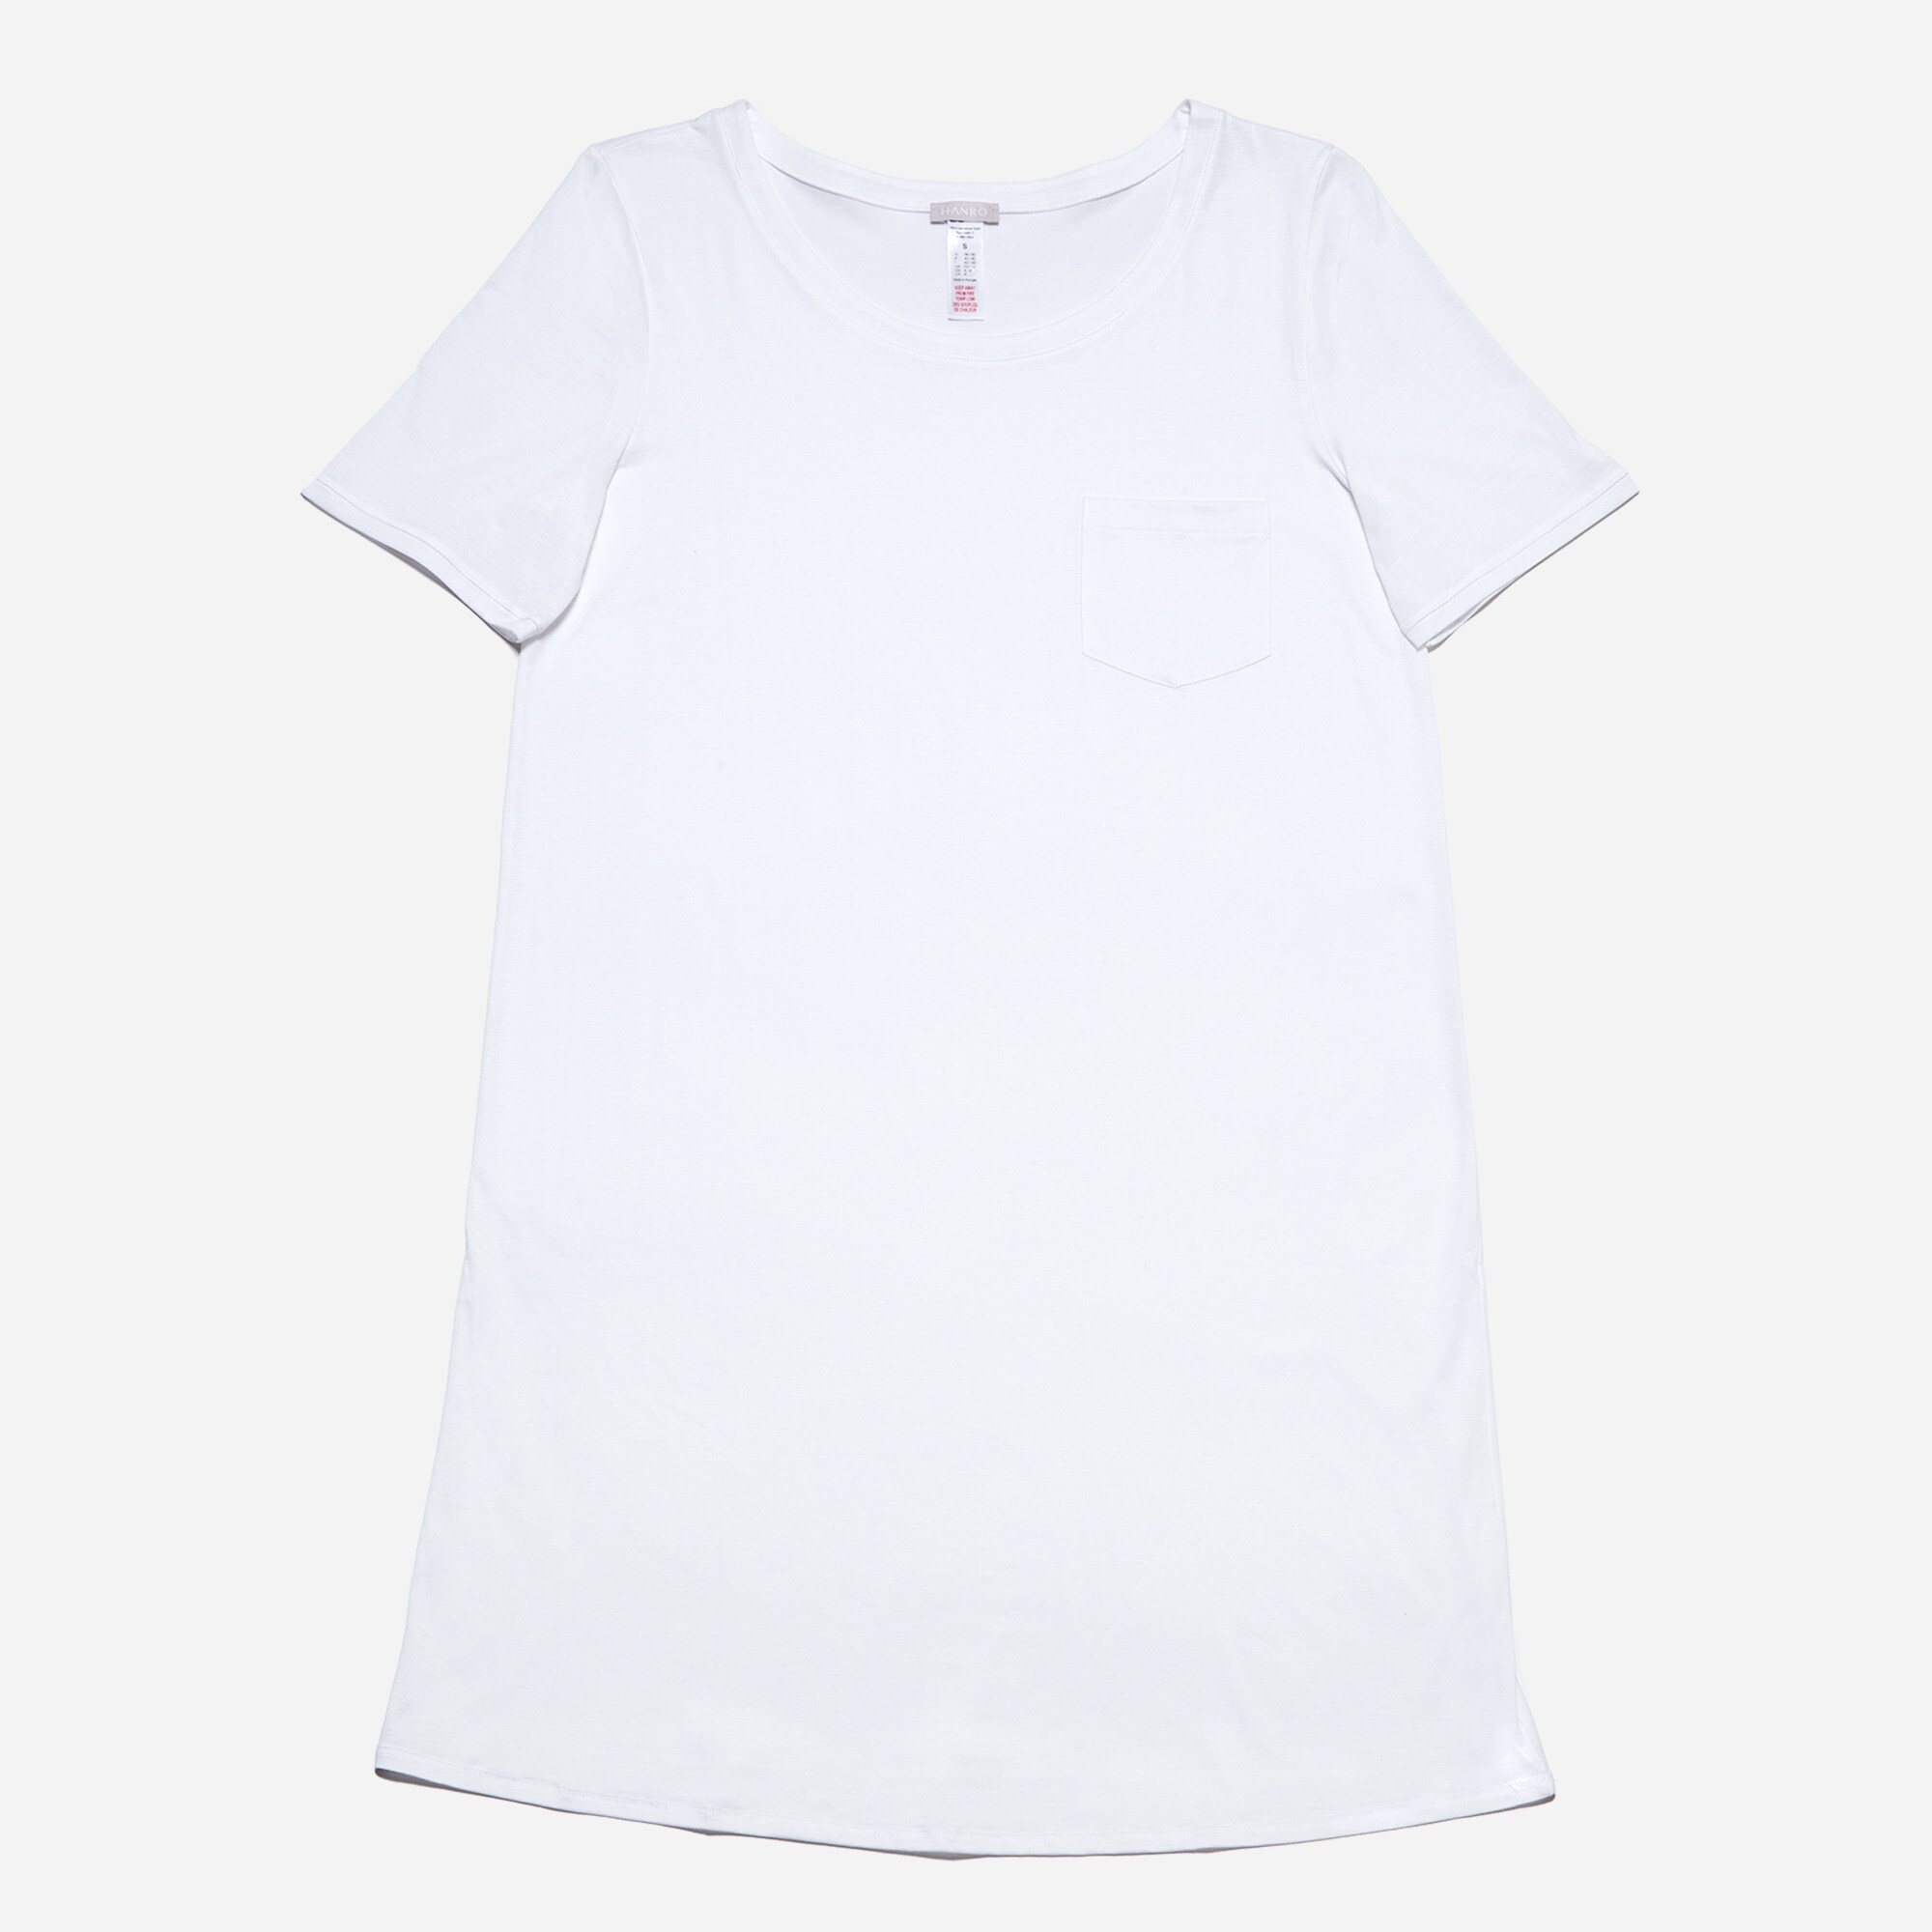  HANRO® cotton deluxe short-sleeve bigshirt